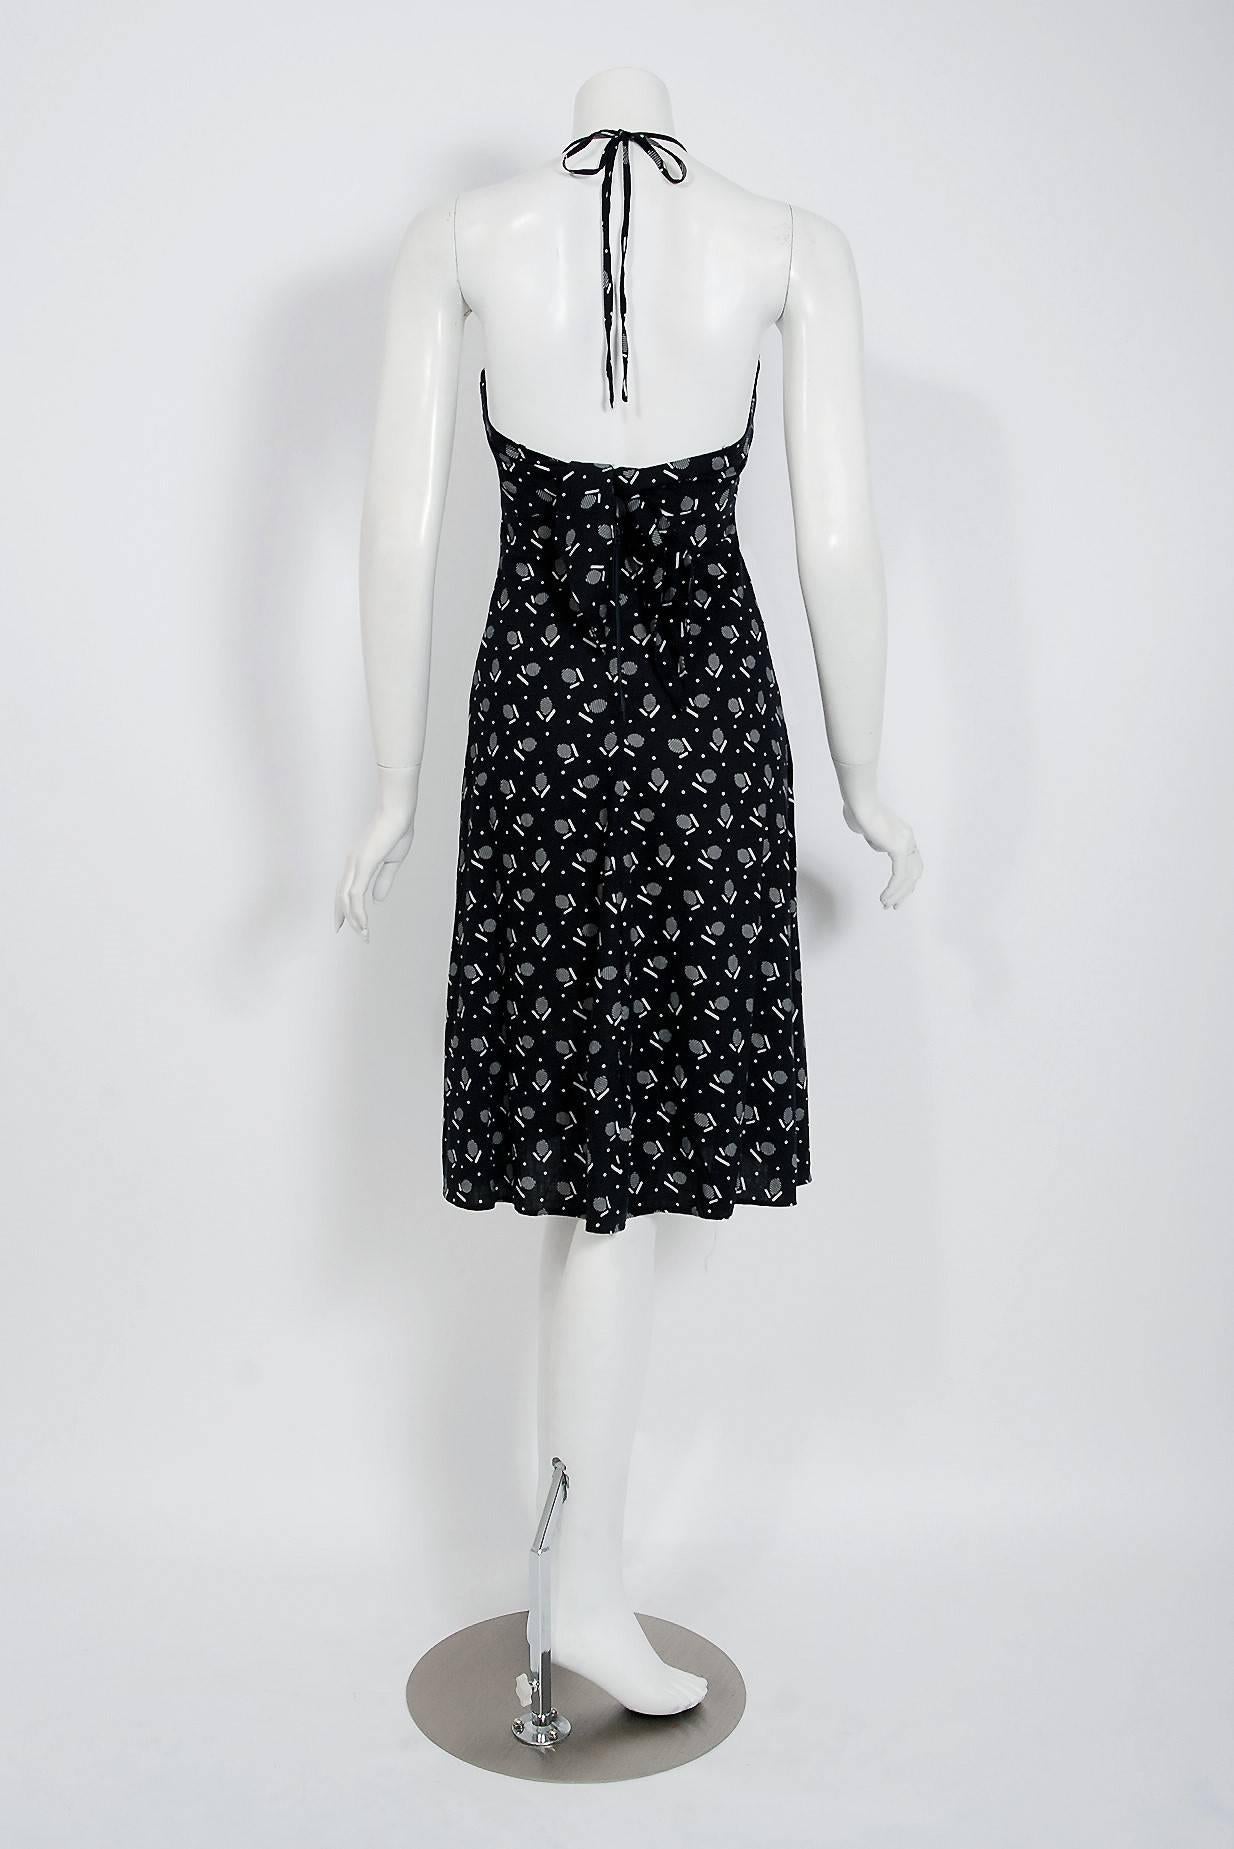 1977 Biba London Black & White Deco Dots Print Cotton Halter Backless Dress  1